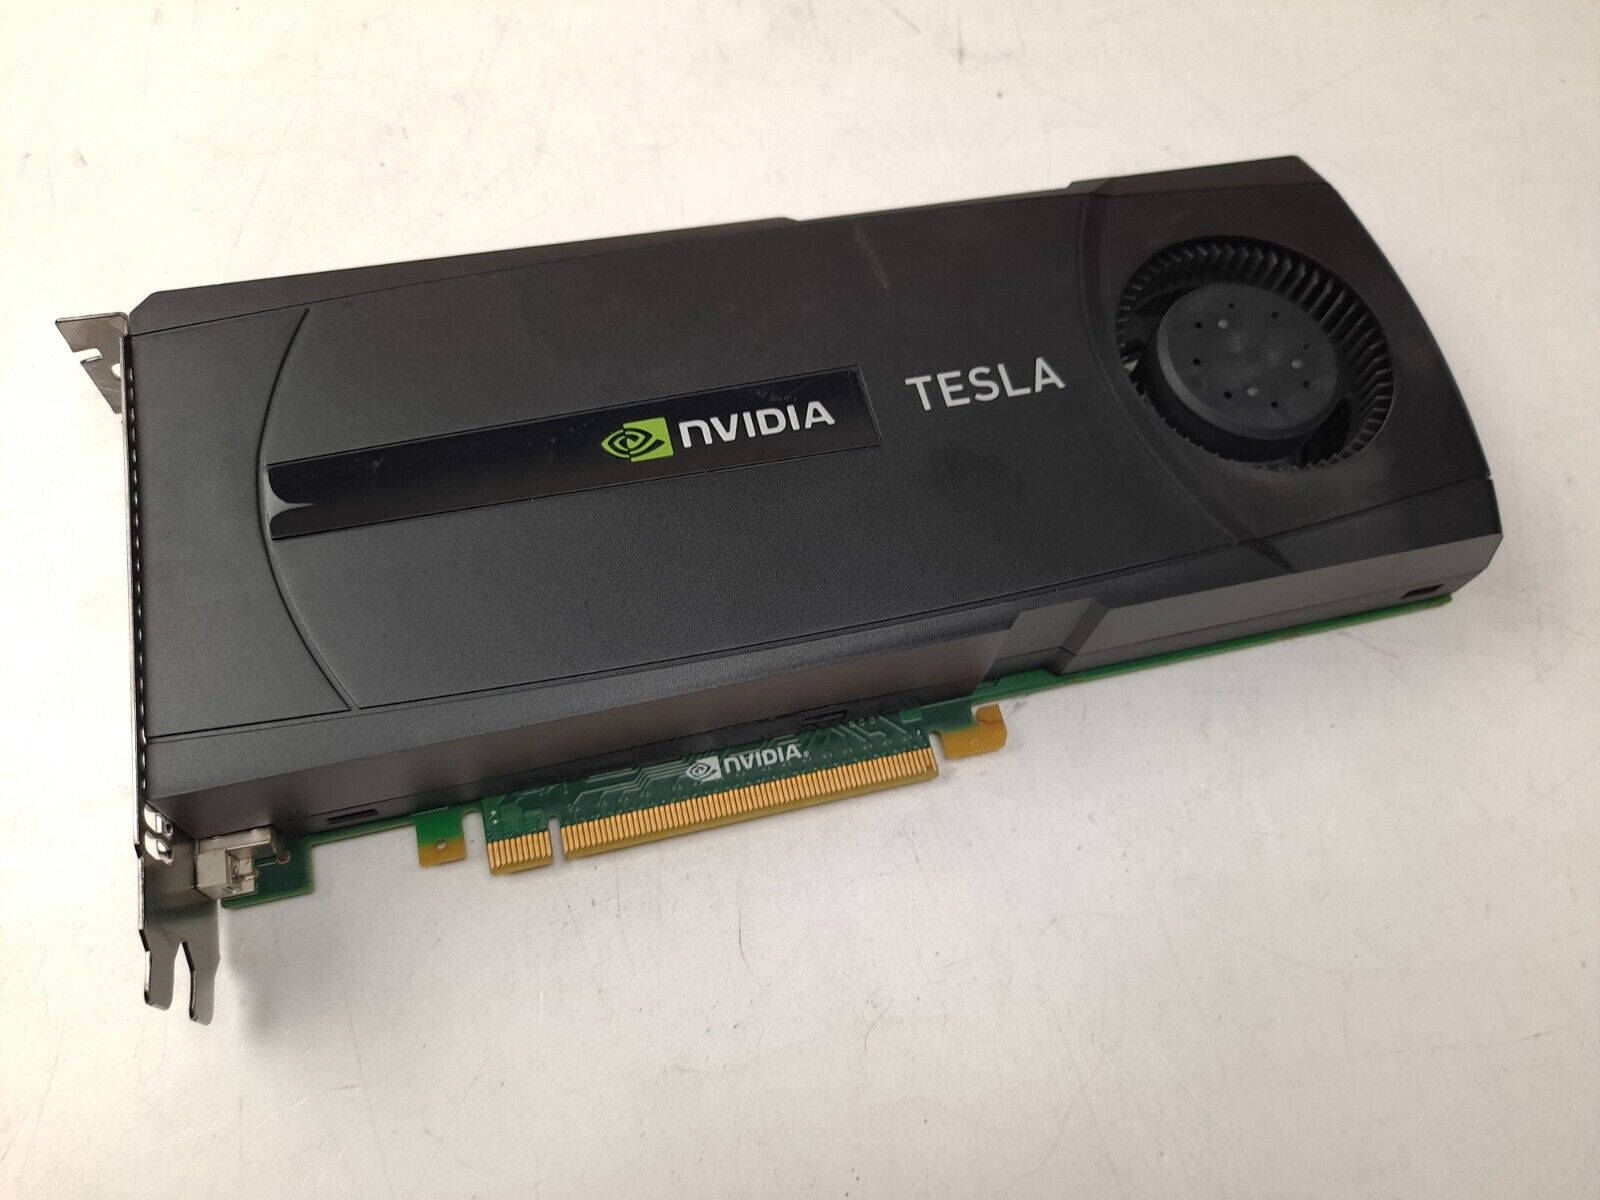 nVidia TESLA C2070 5376MB GDDR5 PCIe 2.0 x16 Graphics Card GPU